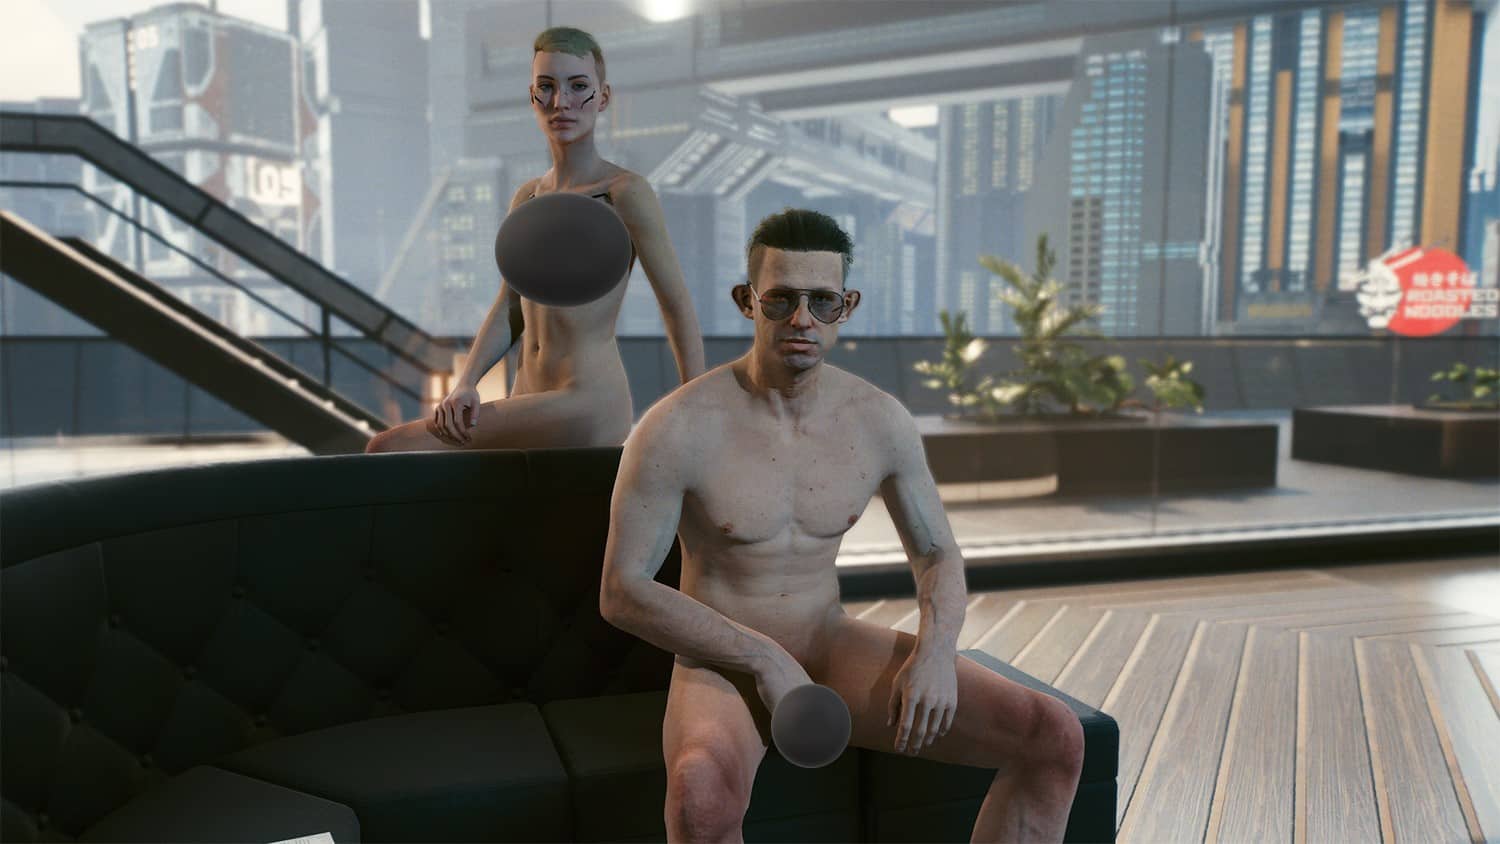 Kirk Nude Cyberpunk 2077 Mod